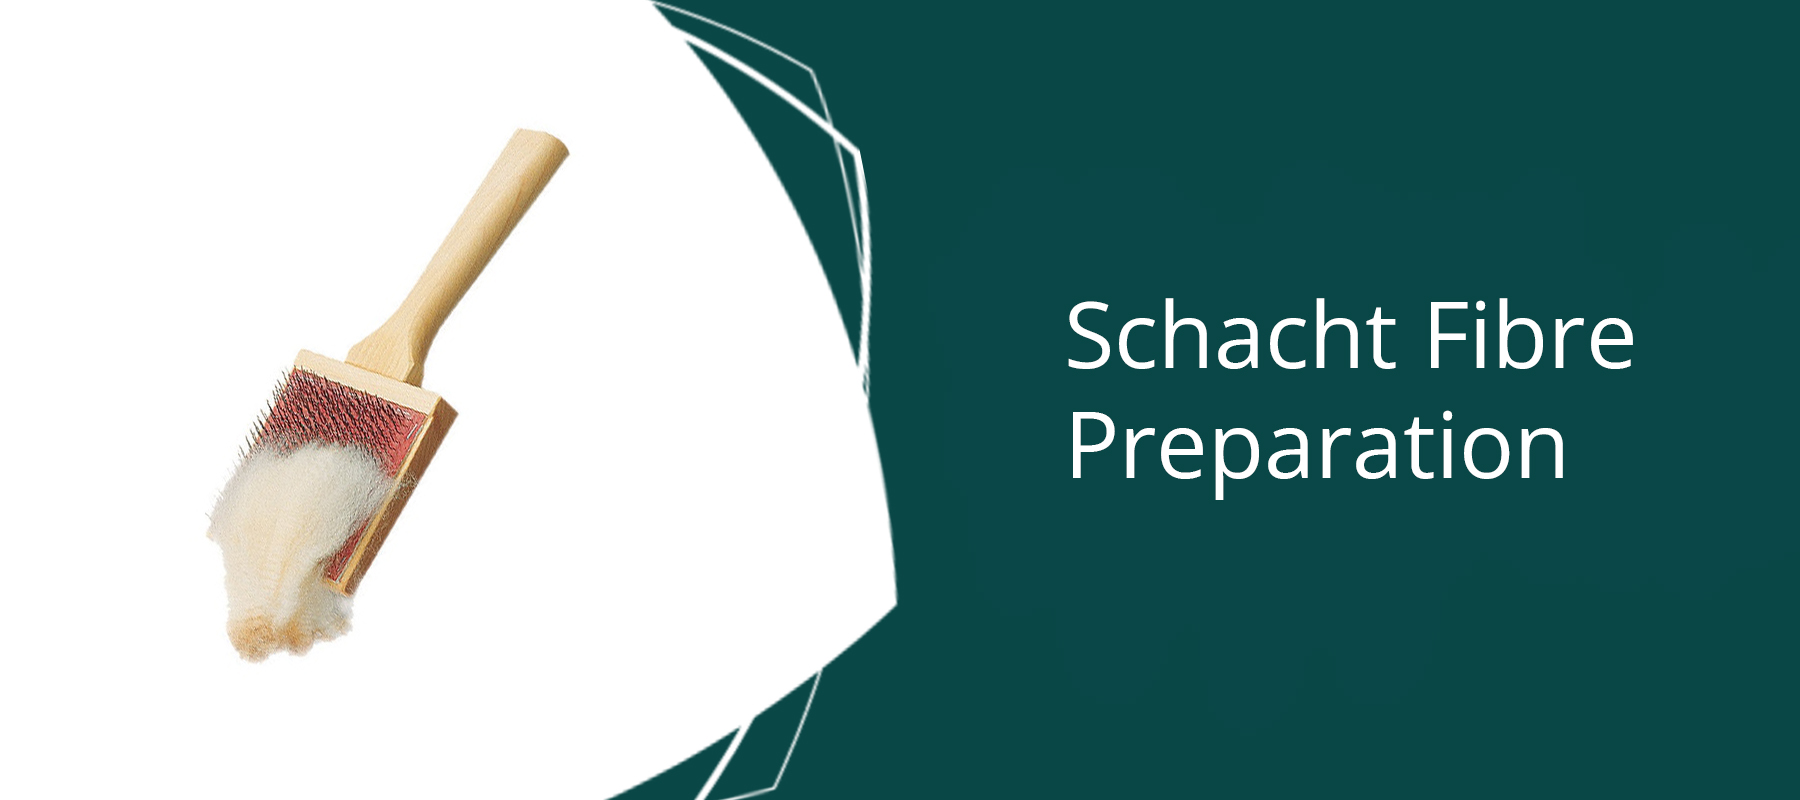 Schacht Fibre Preparation - Thread Collective Australia 